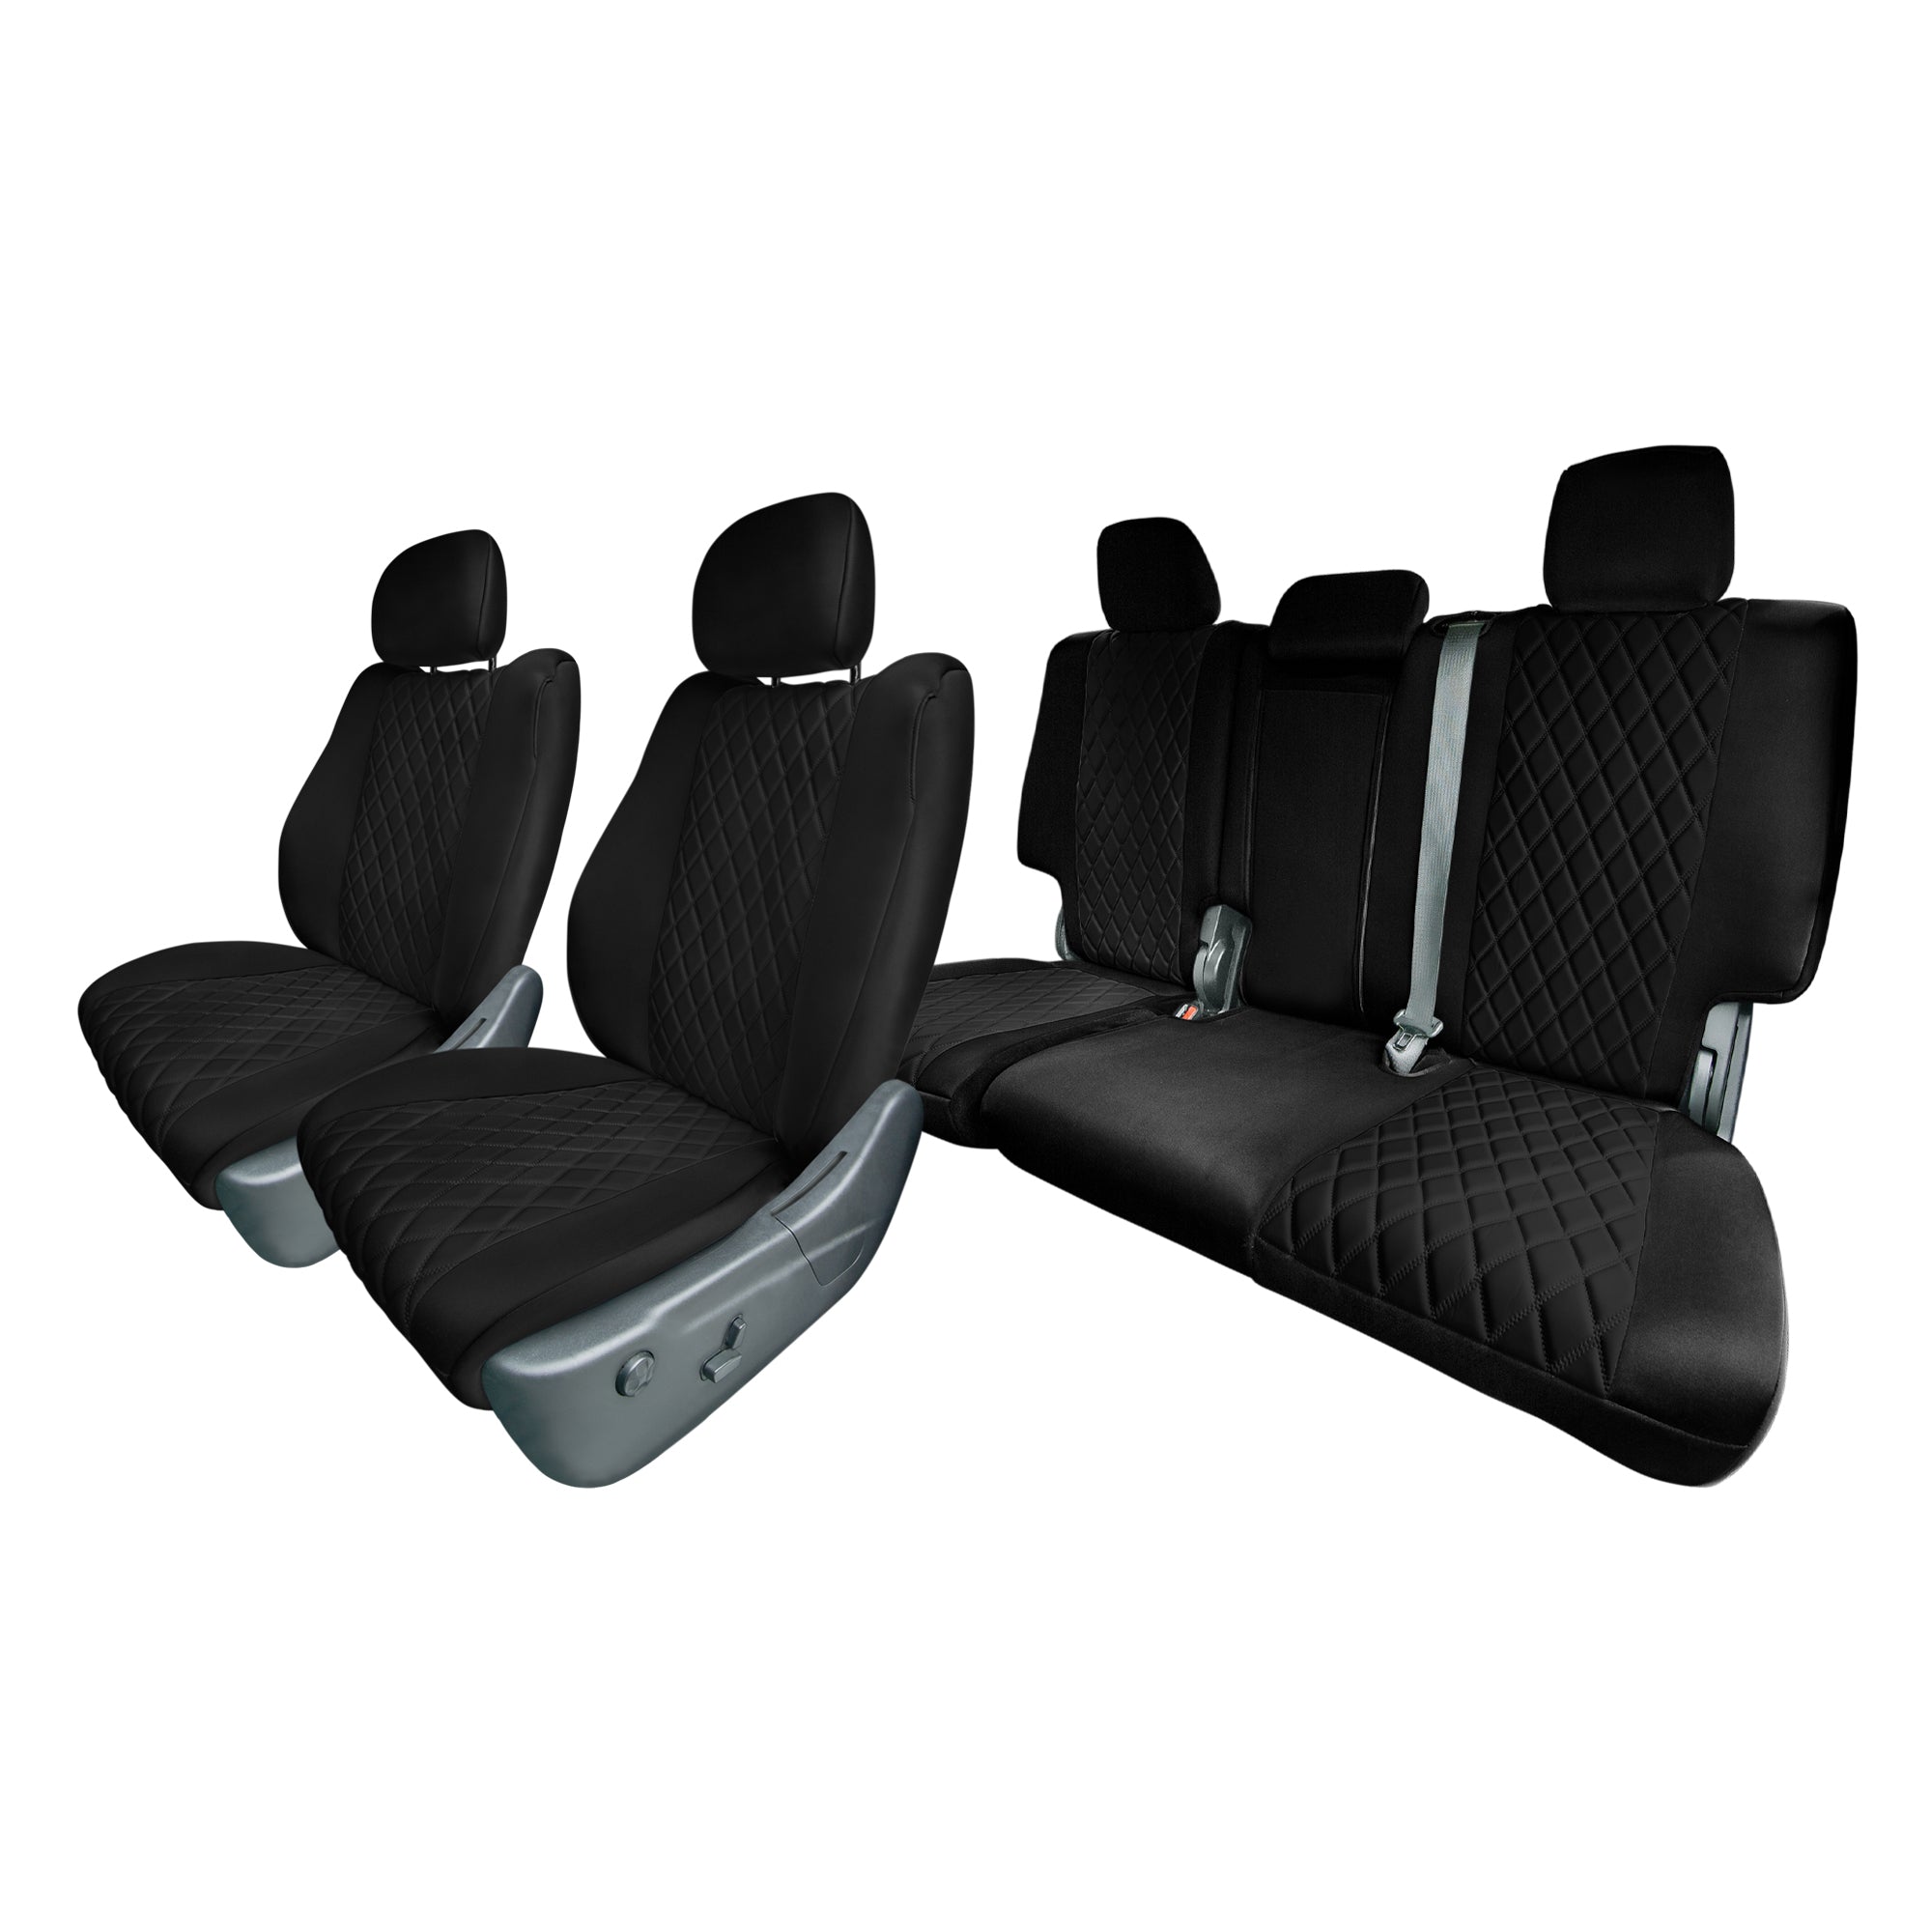 Jeep Grand Cherokee 2011 -2021 - Full Set Seat Covers - Black Ultraflex Neoprene